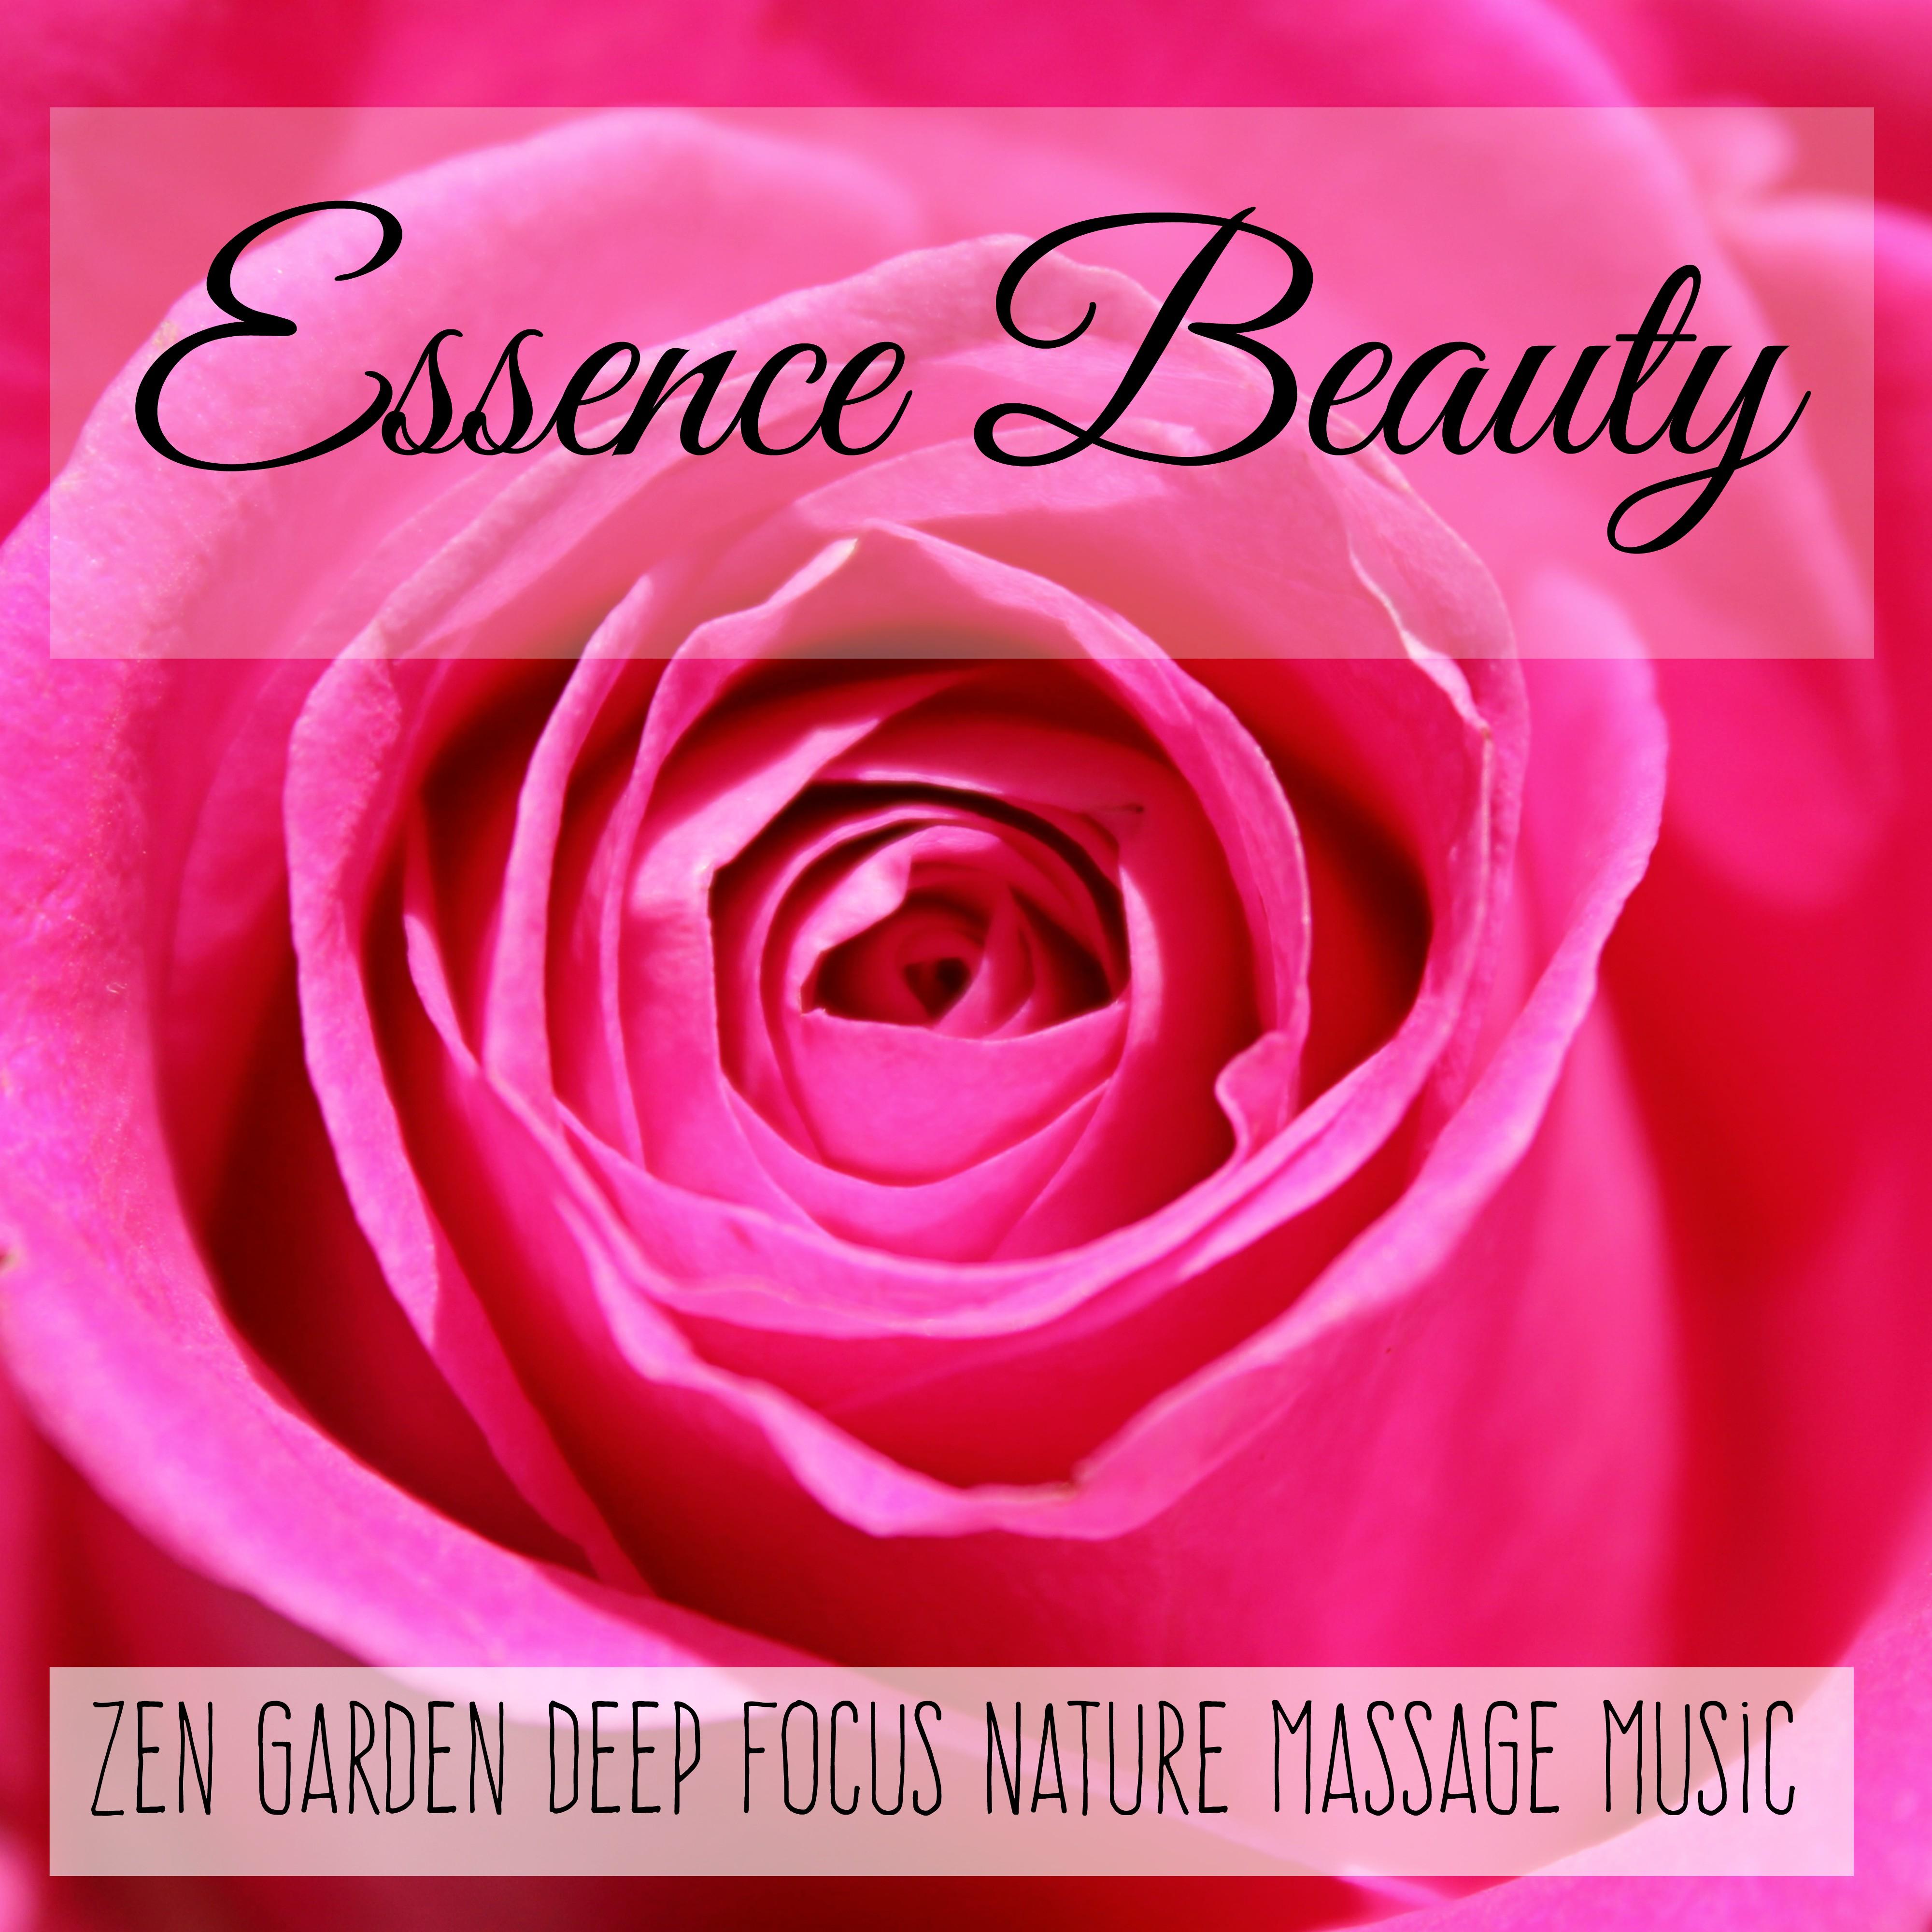 Essence Beauty - Zen Garden Deep Focus Nature Massage Music for Reiki Therapy Yoga Meditation with Nature Instrumental Sounds